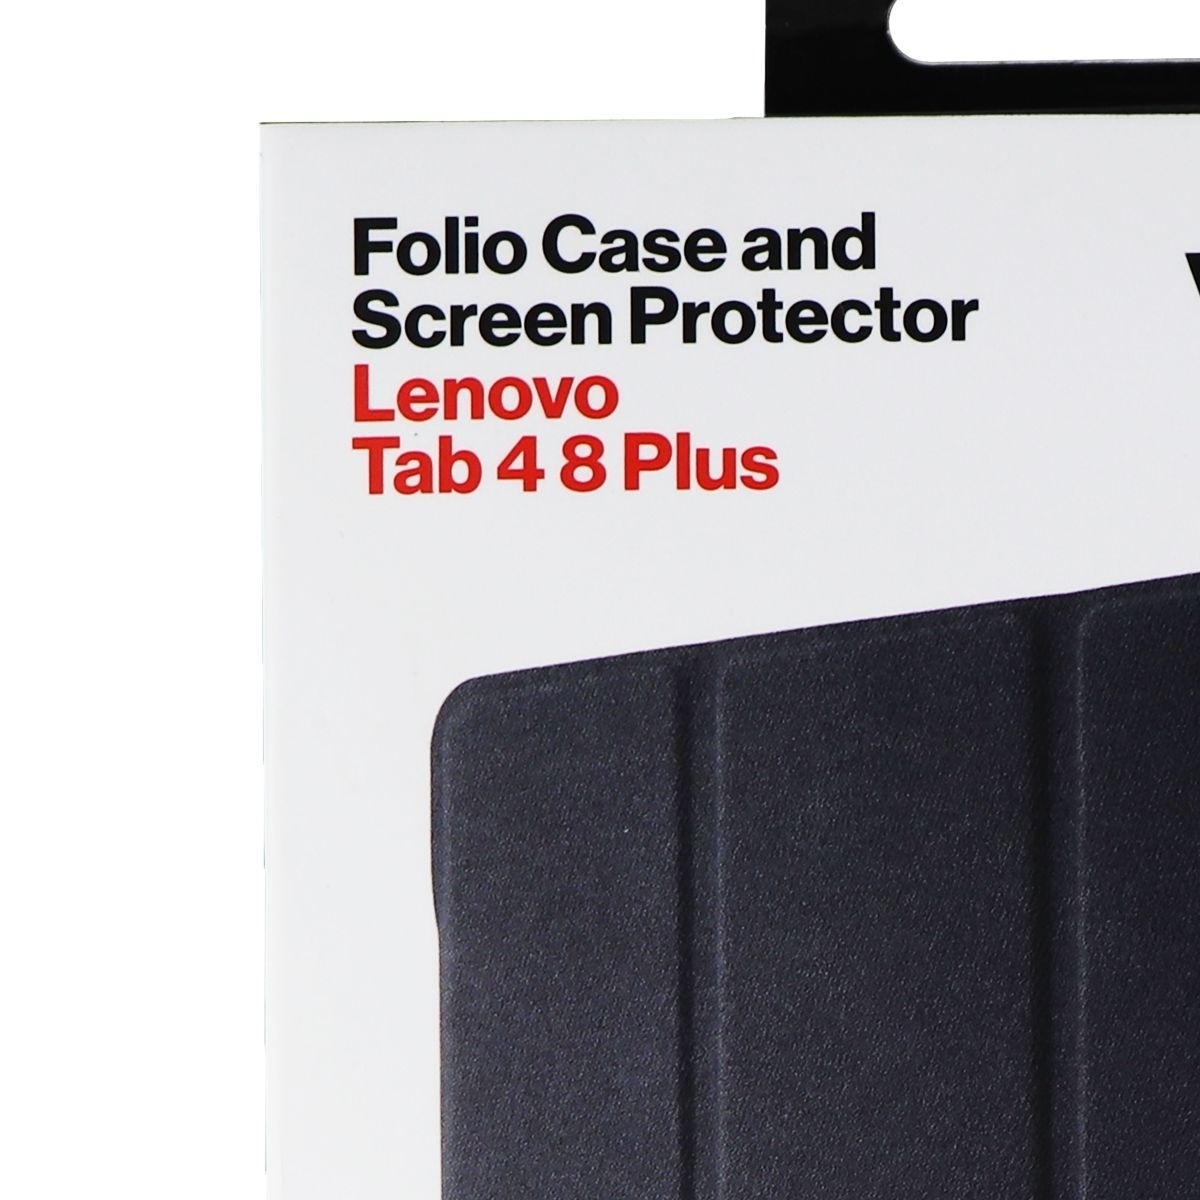 Verizon Folio Hard Case & Tempered Glass For Lenovo Tab 4 8 Plus - Pink